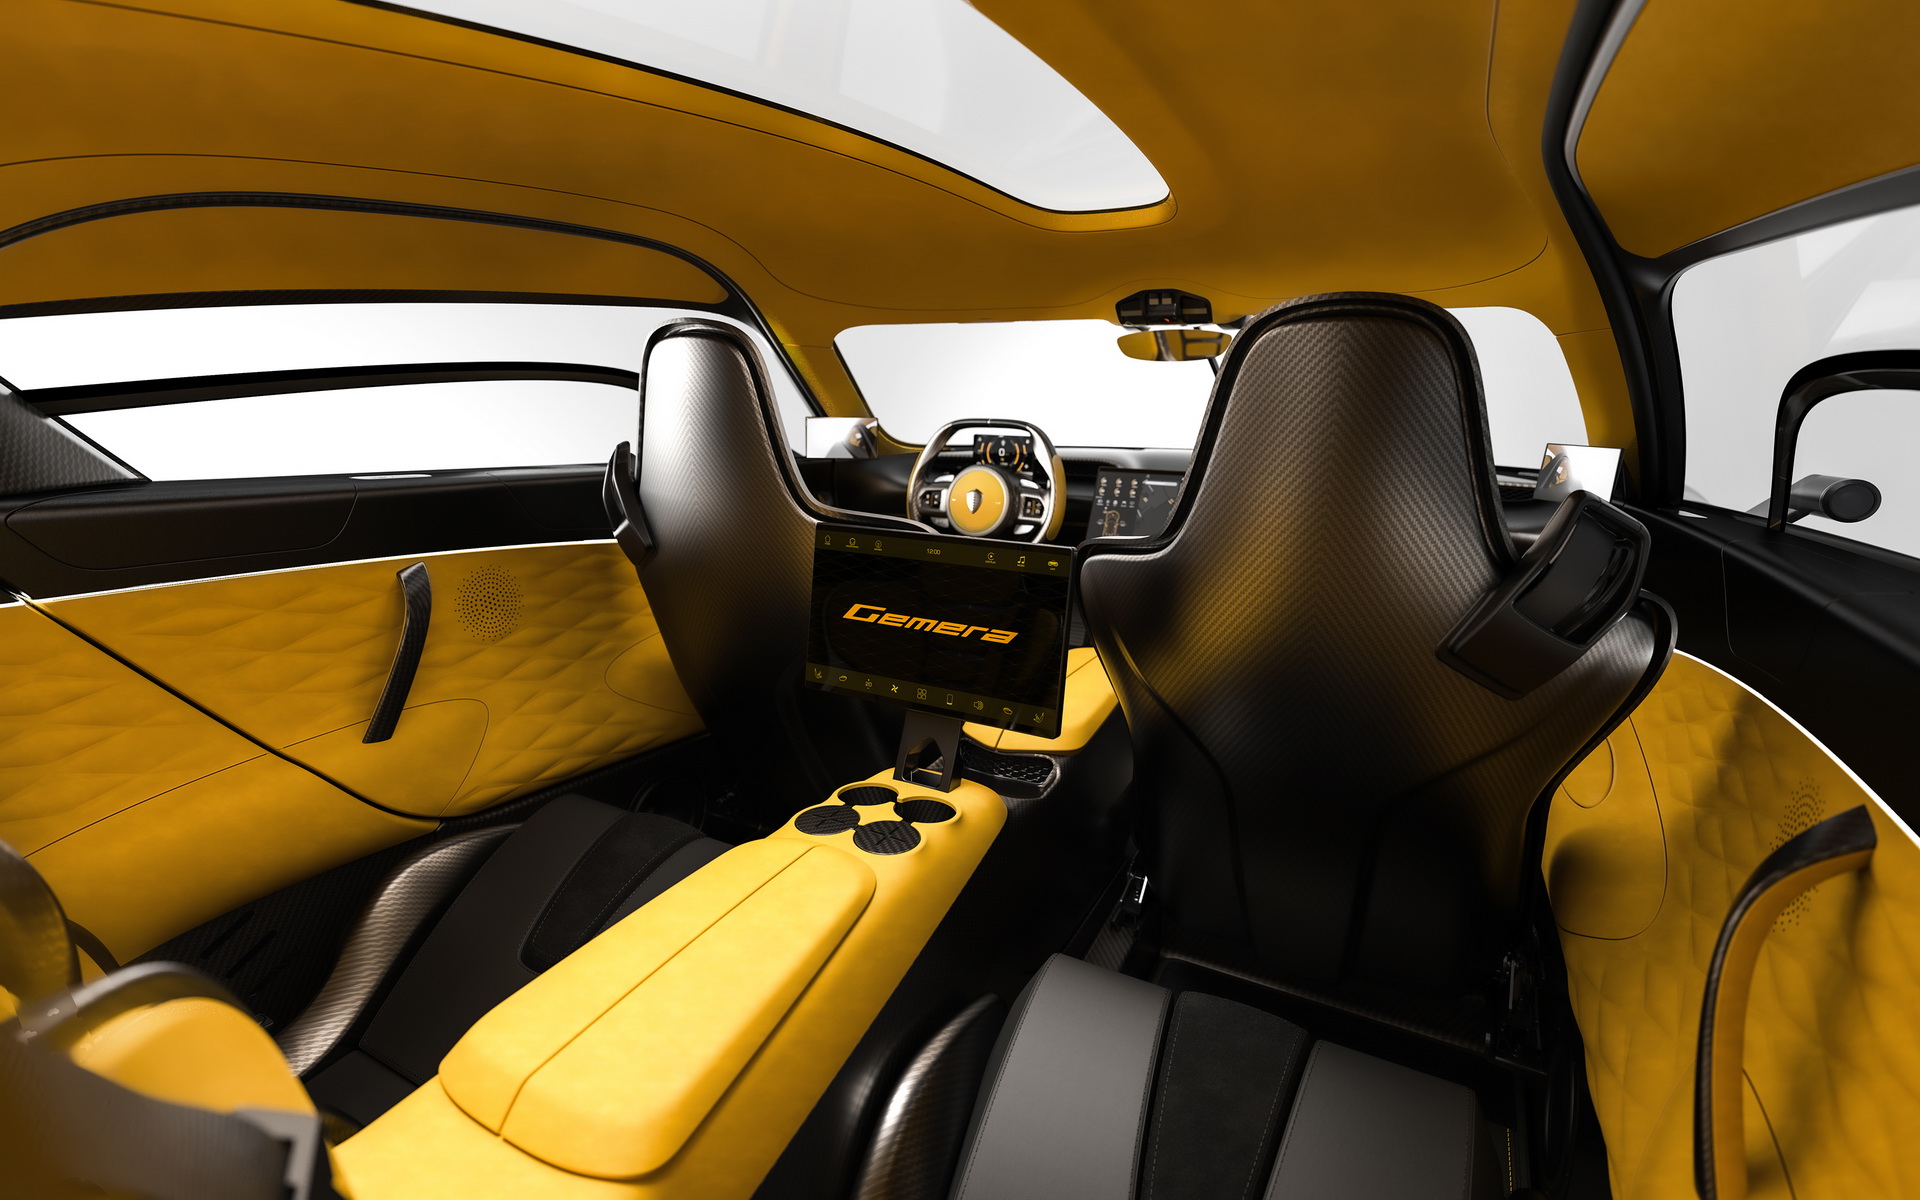 Koenigsegg Gemera (2020) - Interior